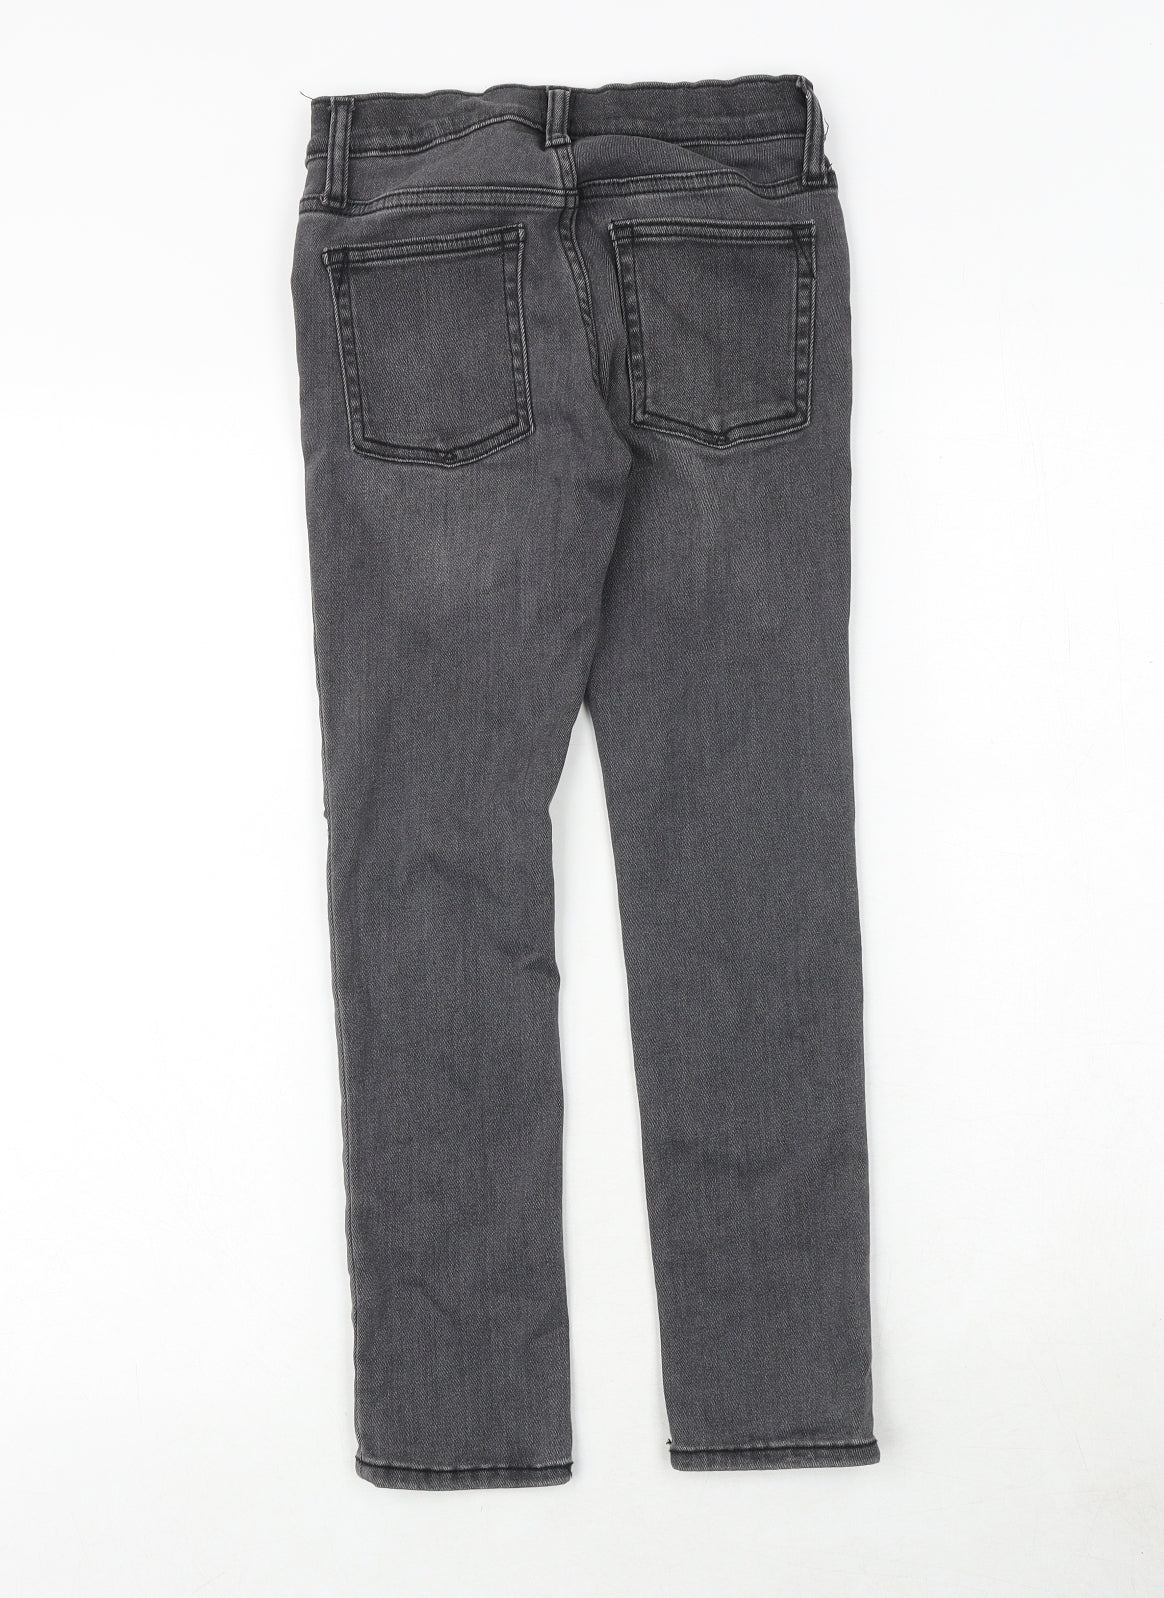 Gap Girls Grey Cotton Skinny Jeans Size 8 Years Regular Zip - Distressed